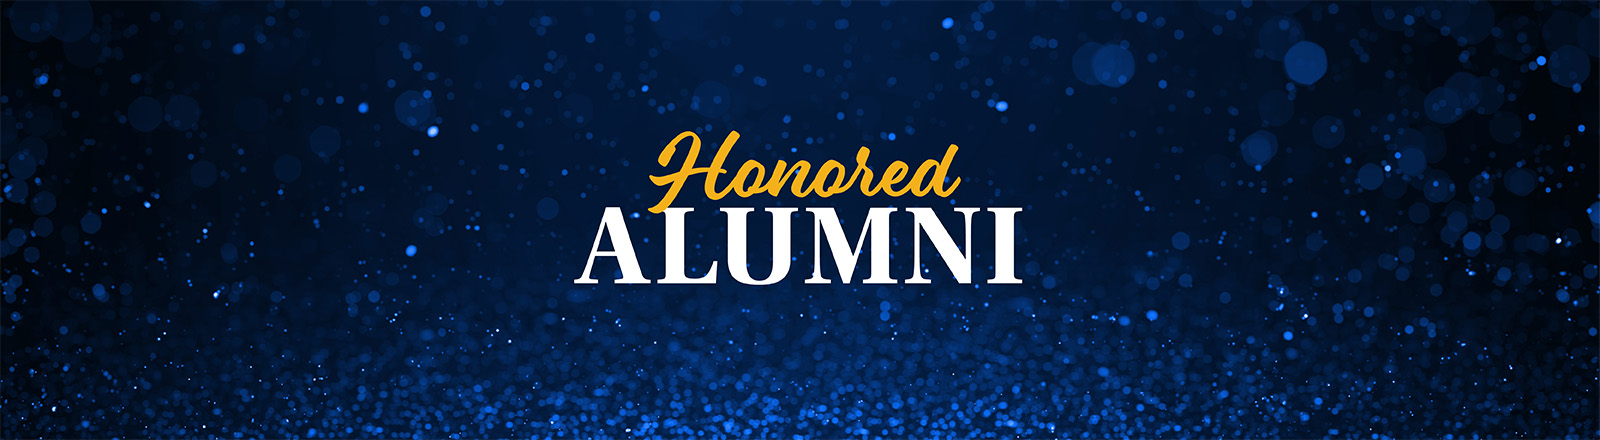 Honored Alumni logo